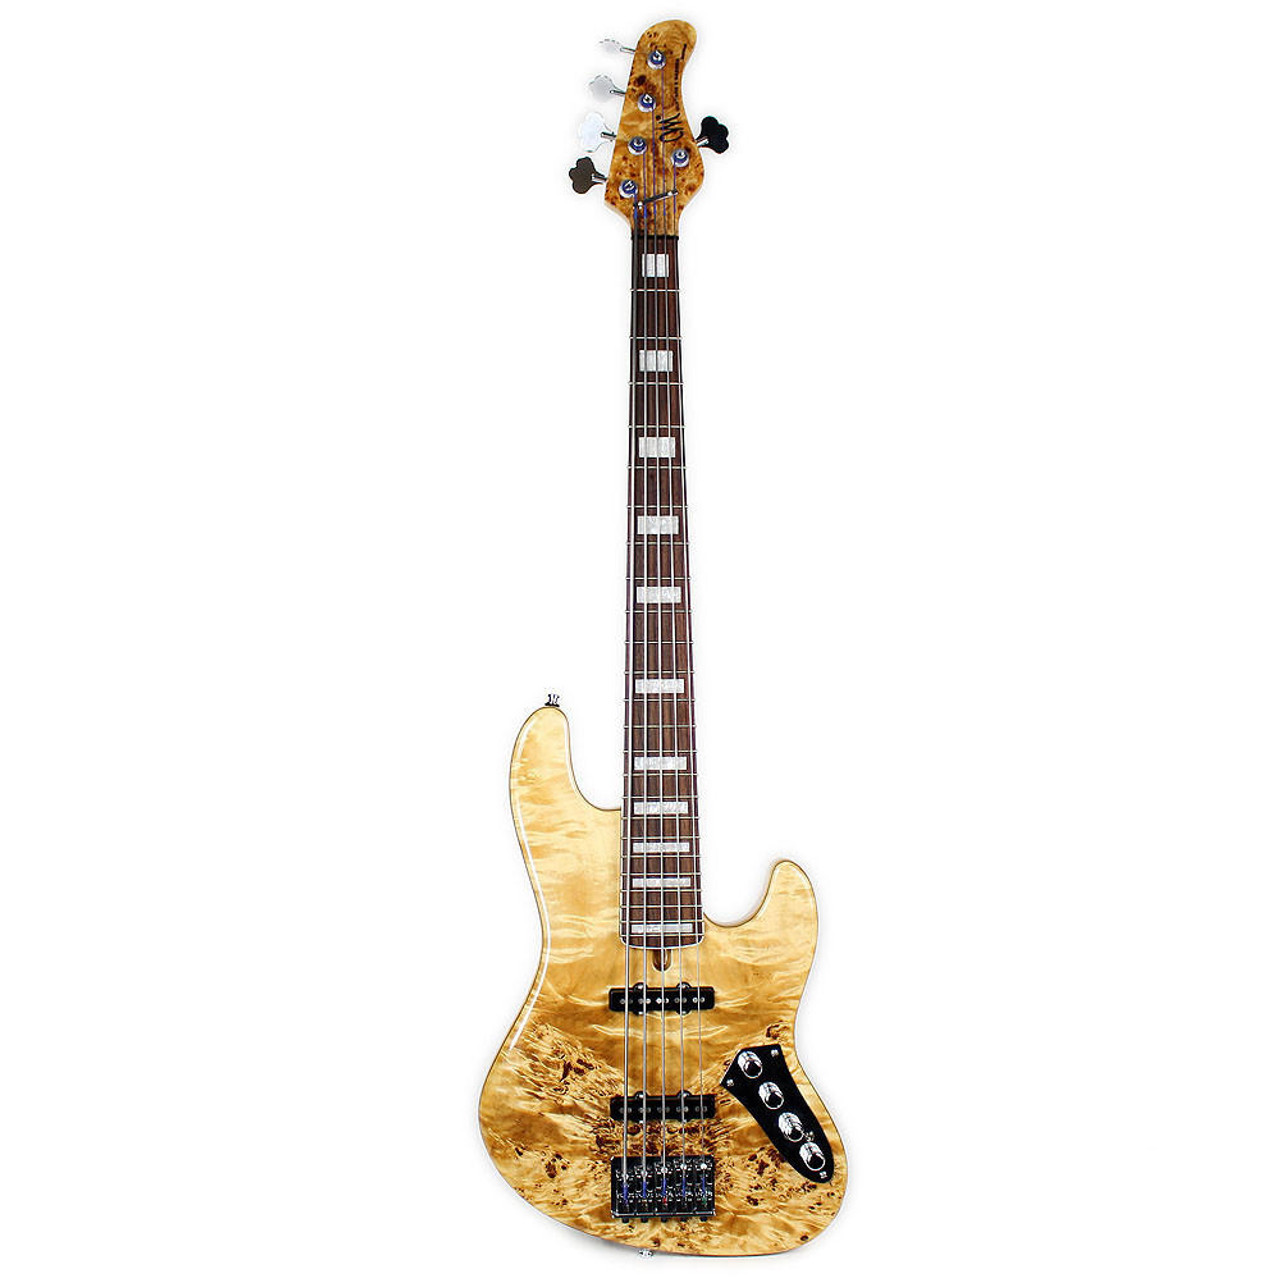 Used Mayones Jabba Custom 5-String Electric Bass in Natural Gloss